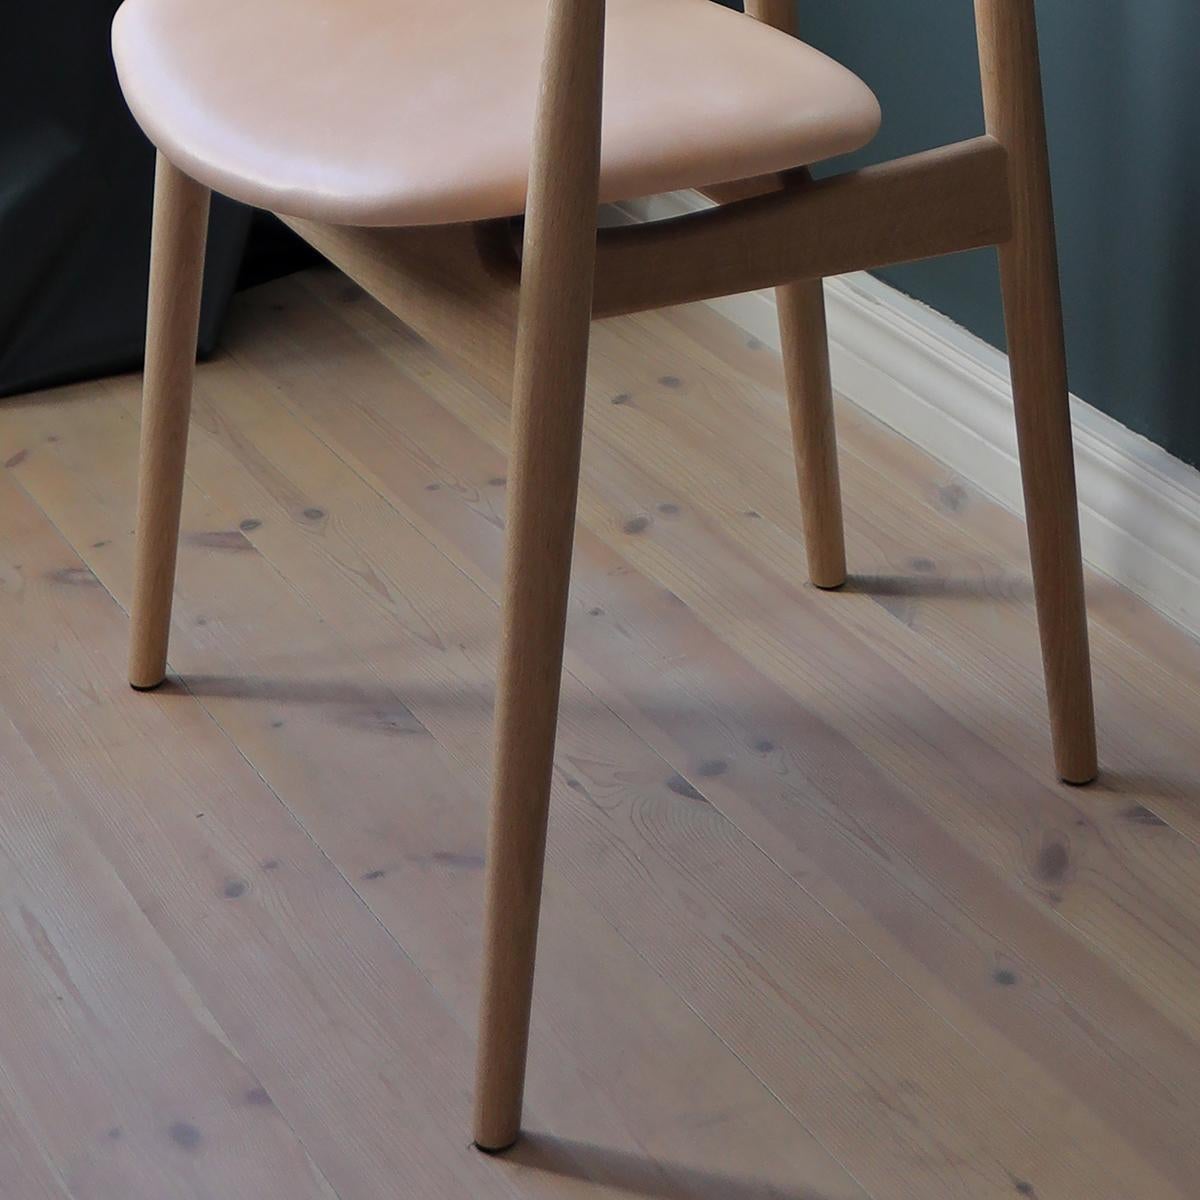 Danish Finn Juhl 109 Chair, Wood and Leather by House of Finn Juhl